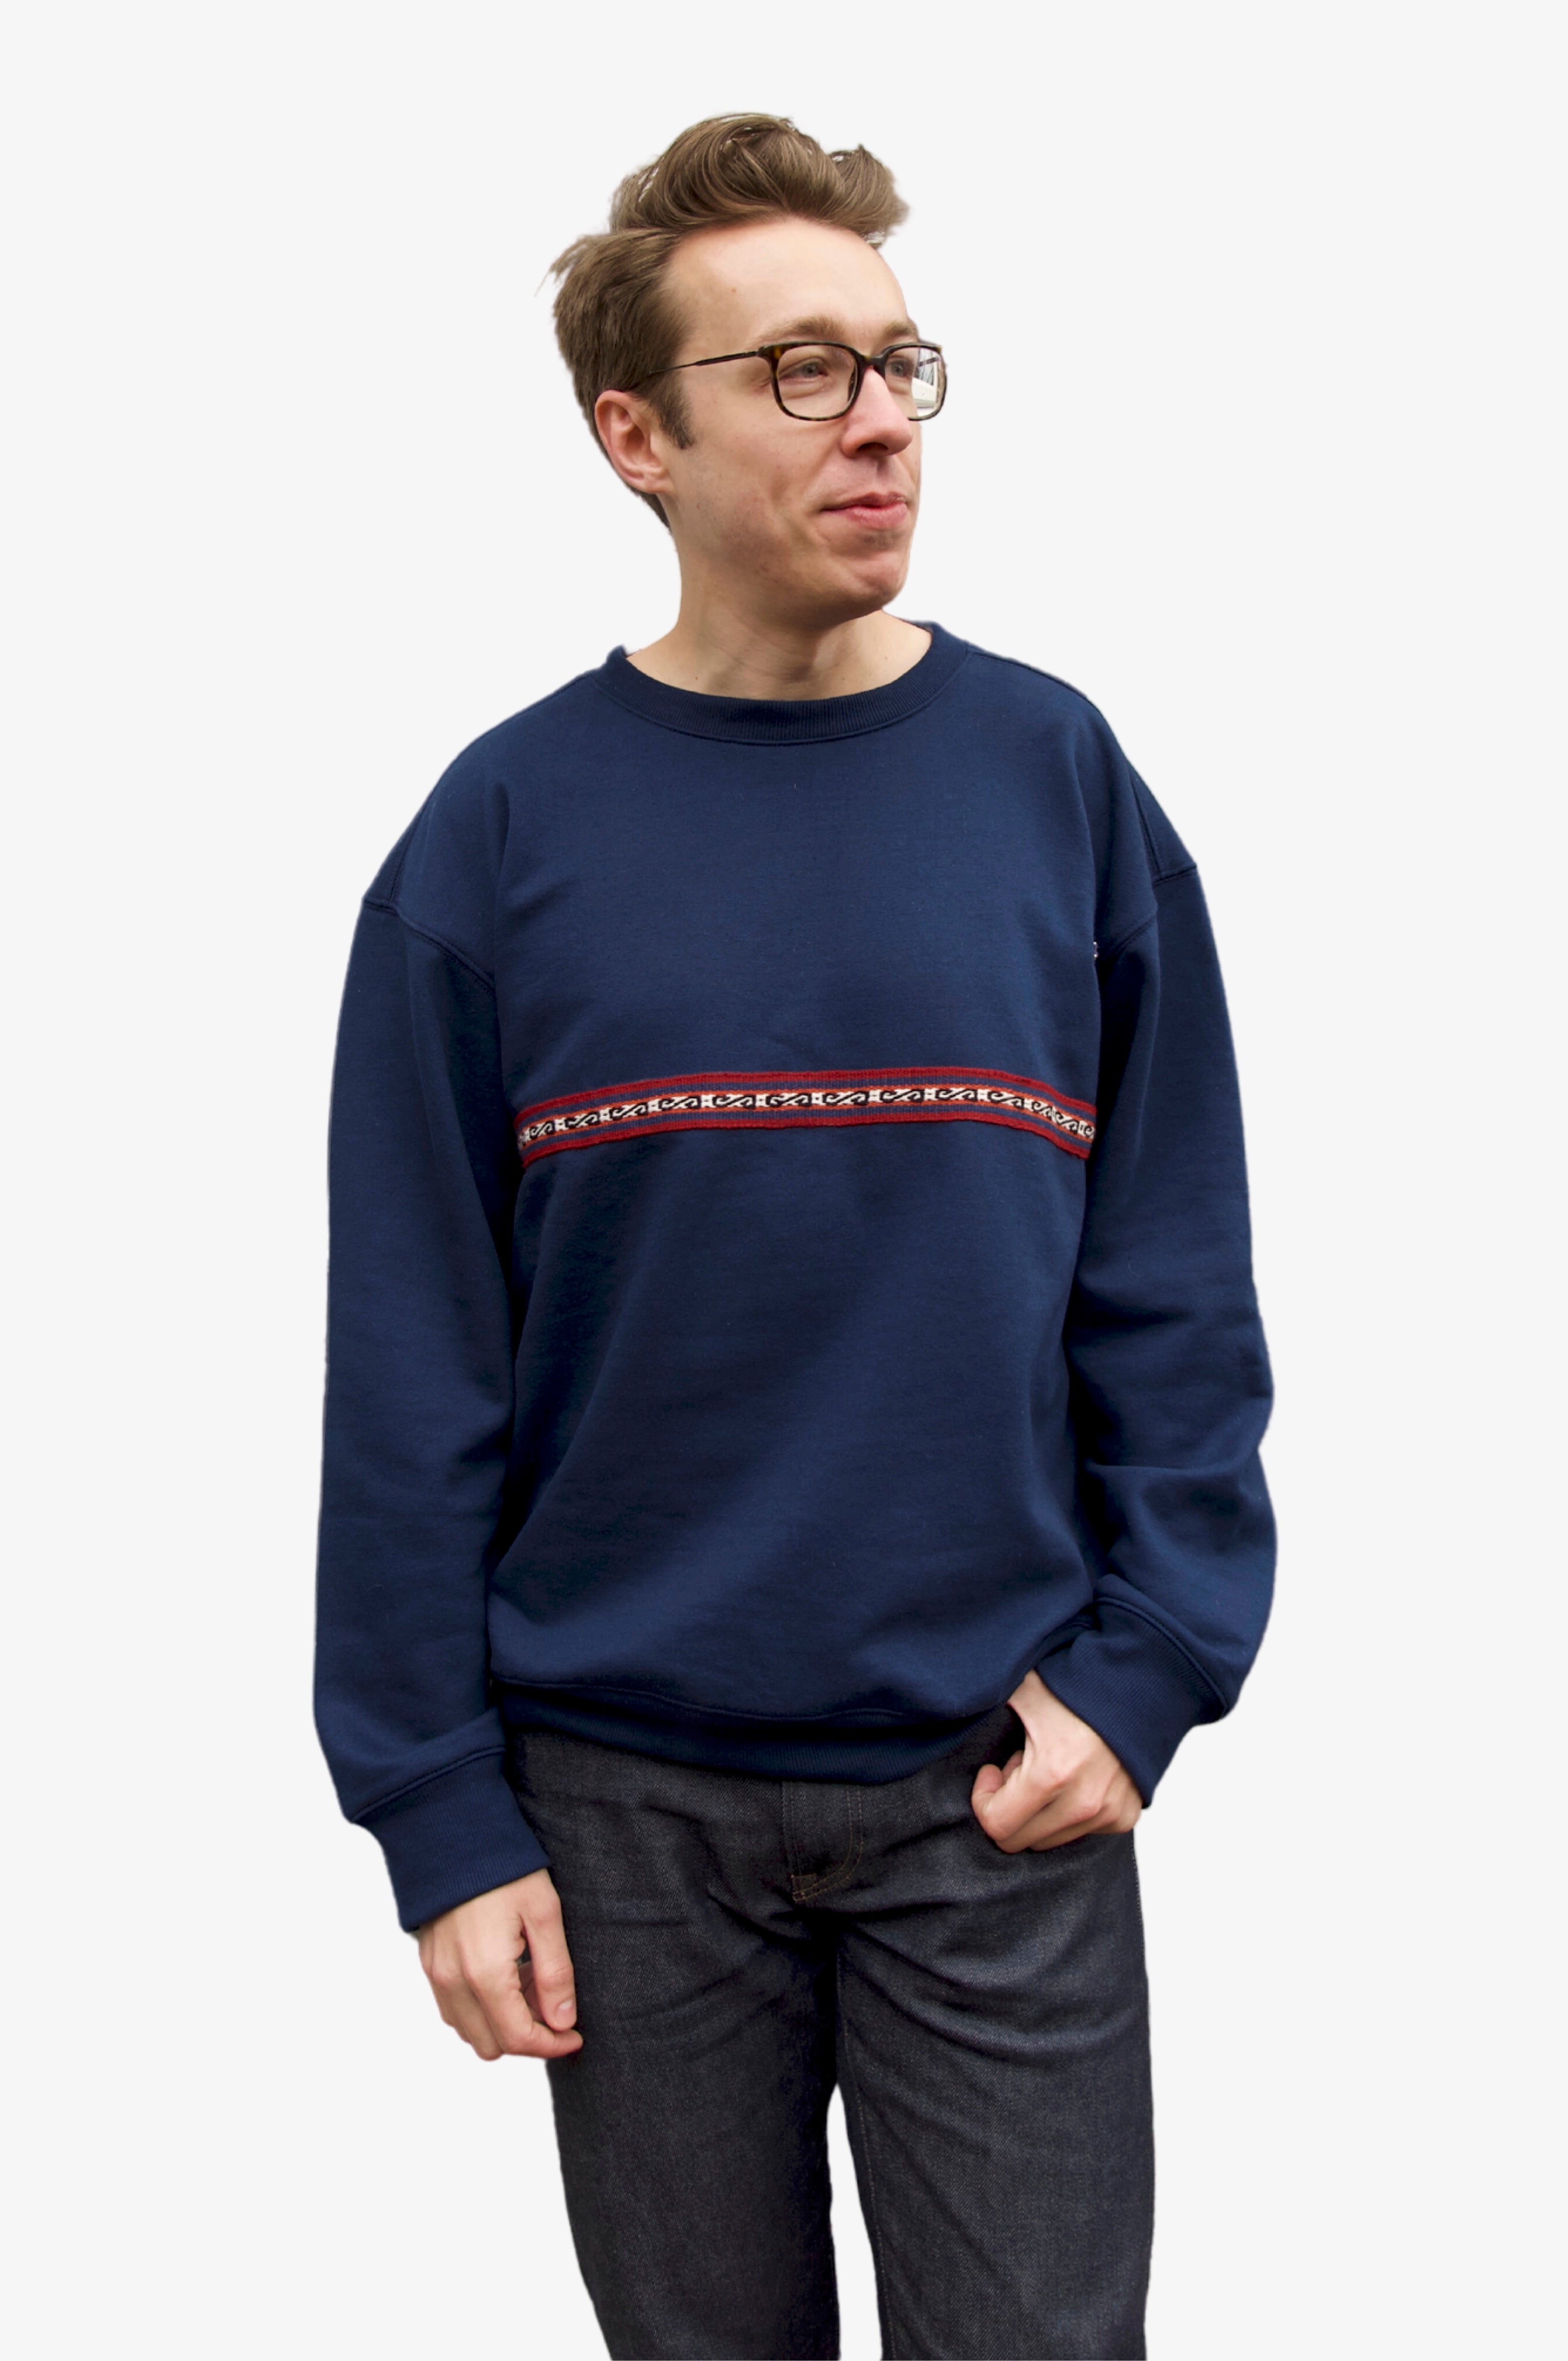 Blue unisex sweatshirt